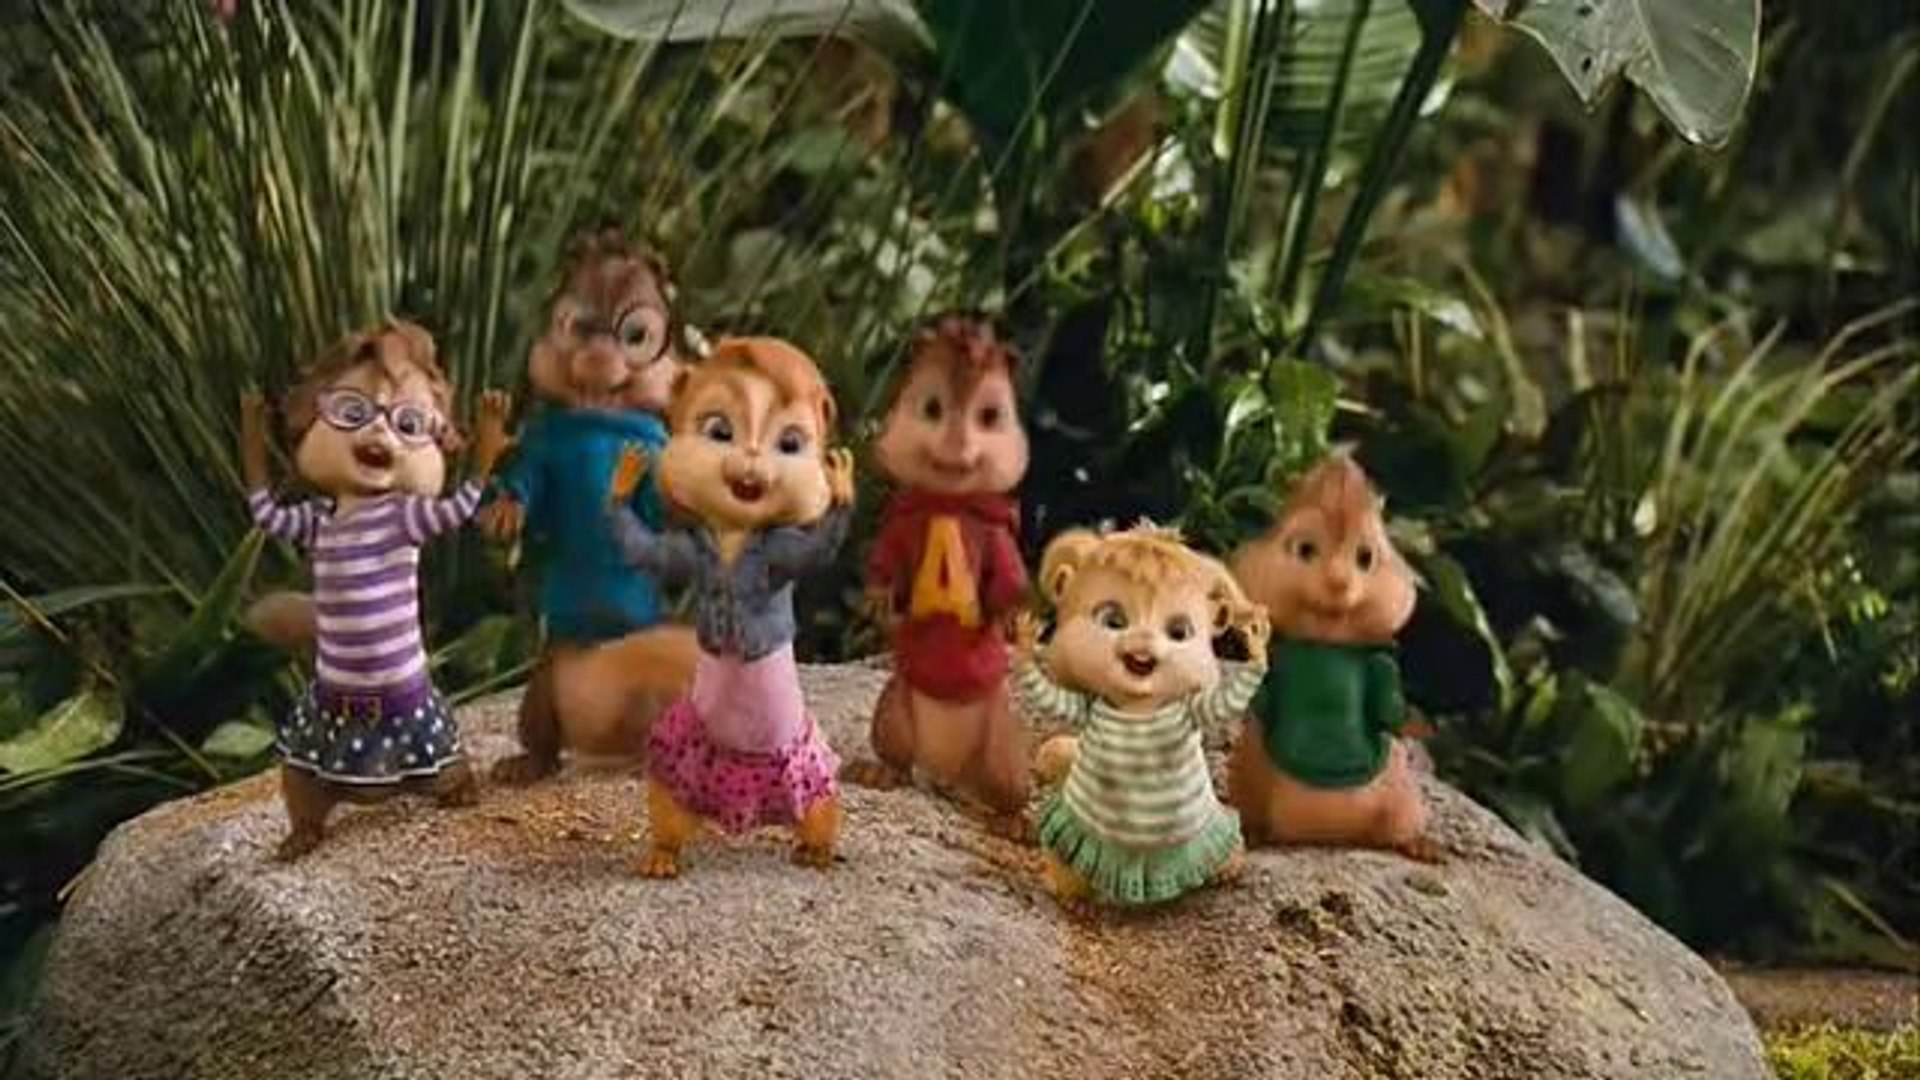 Alvin and the Chipmunks, Chipmunks & Chipettes - BAD ROMANCE Music Video